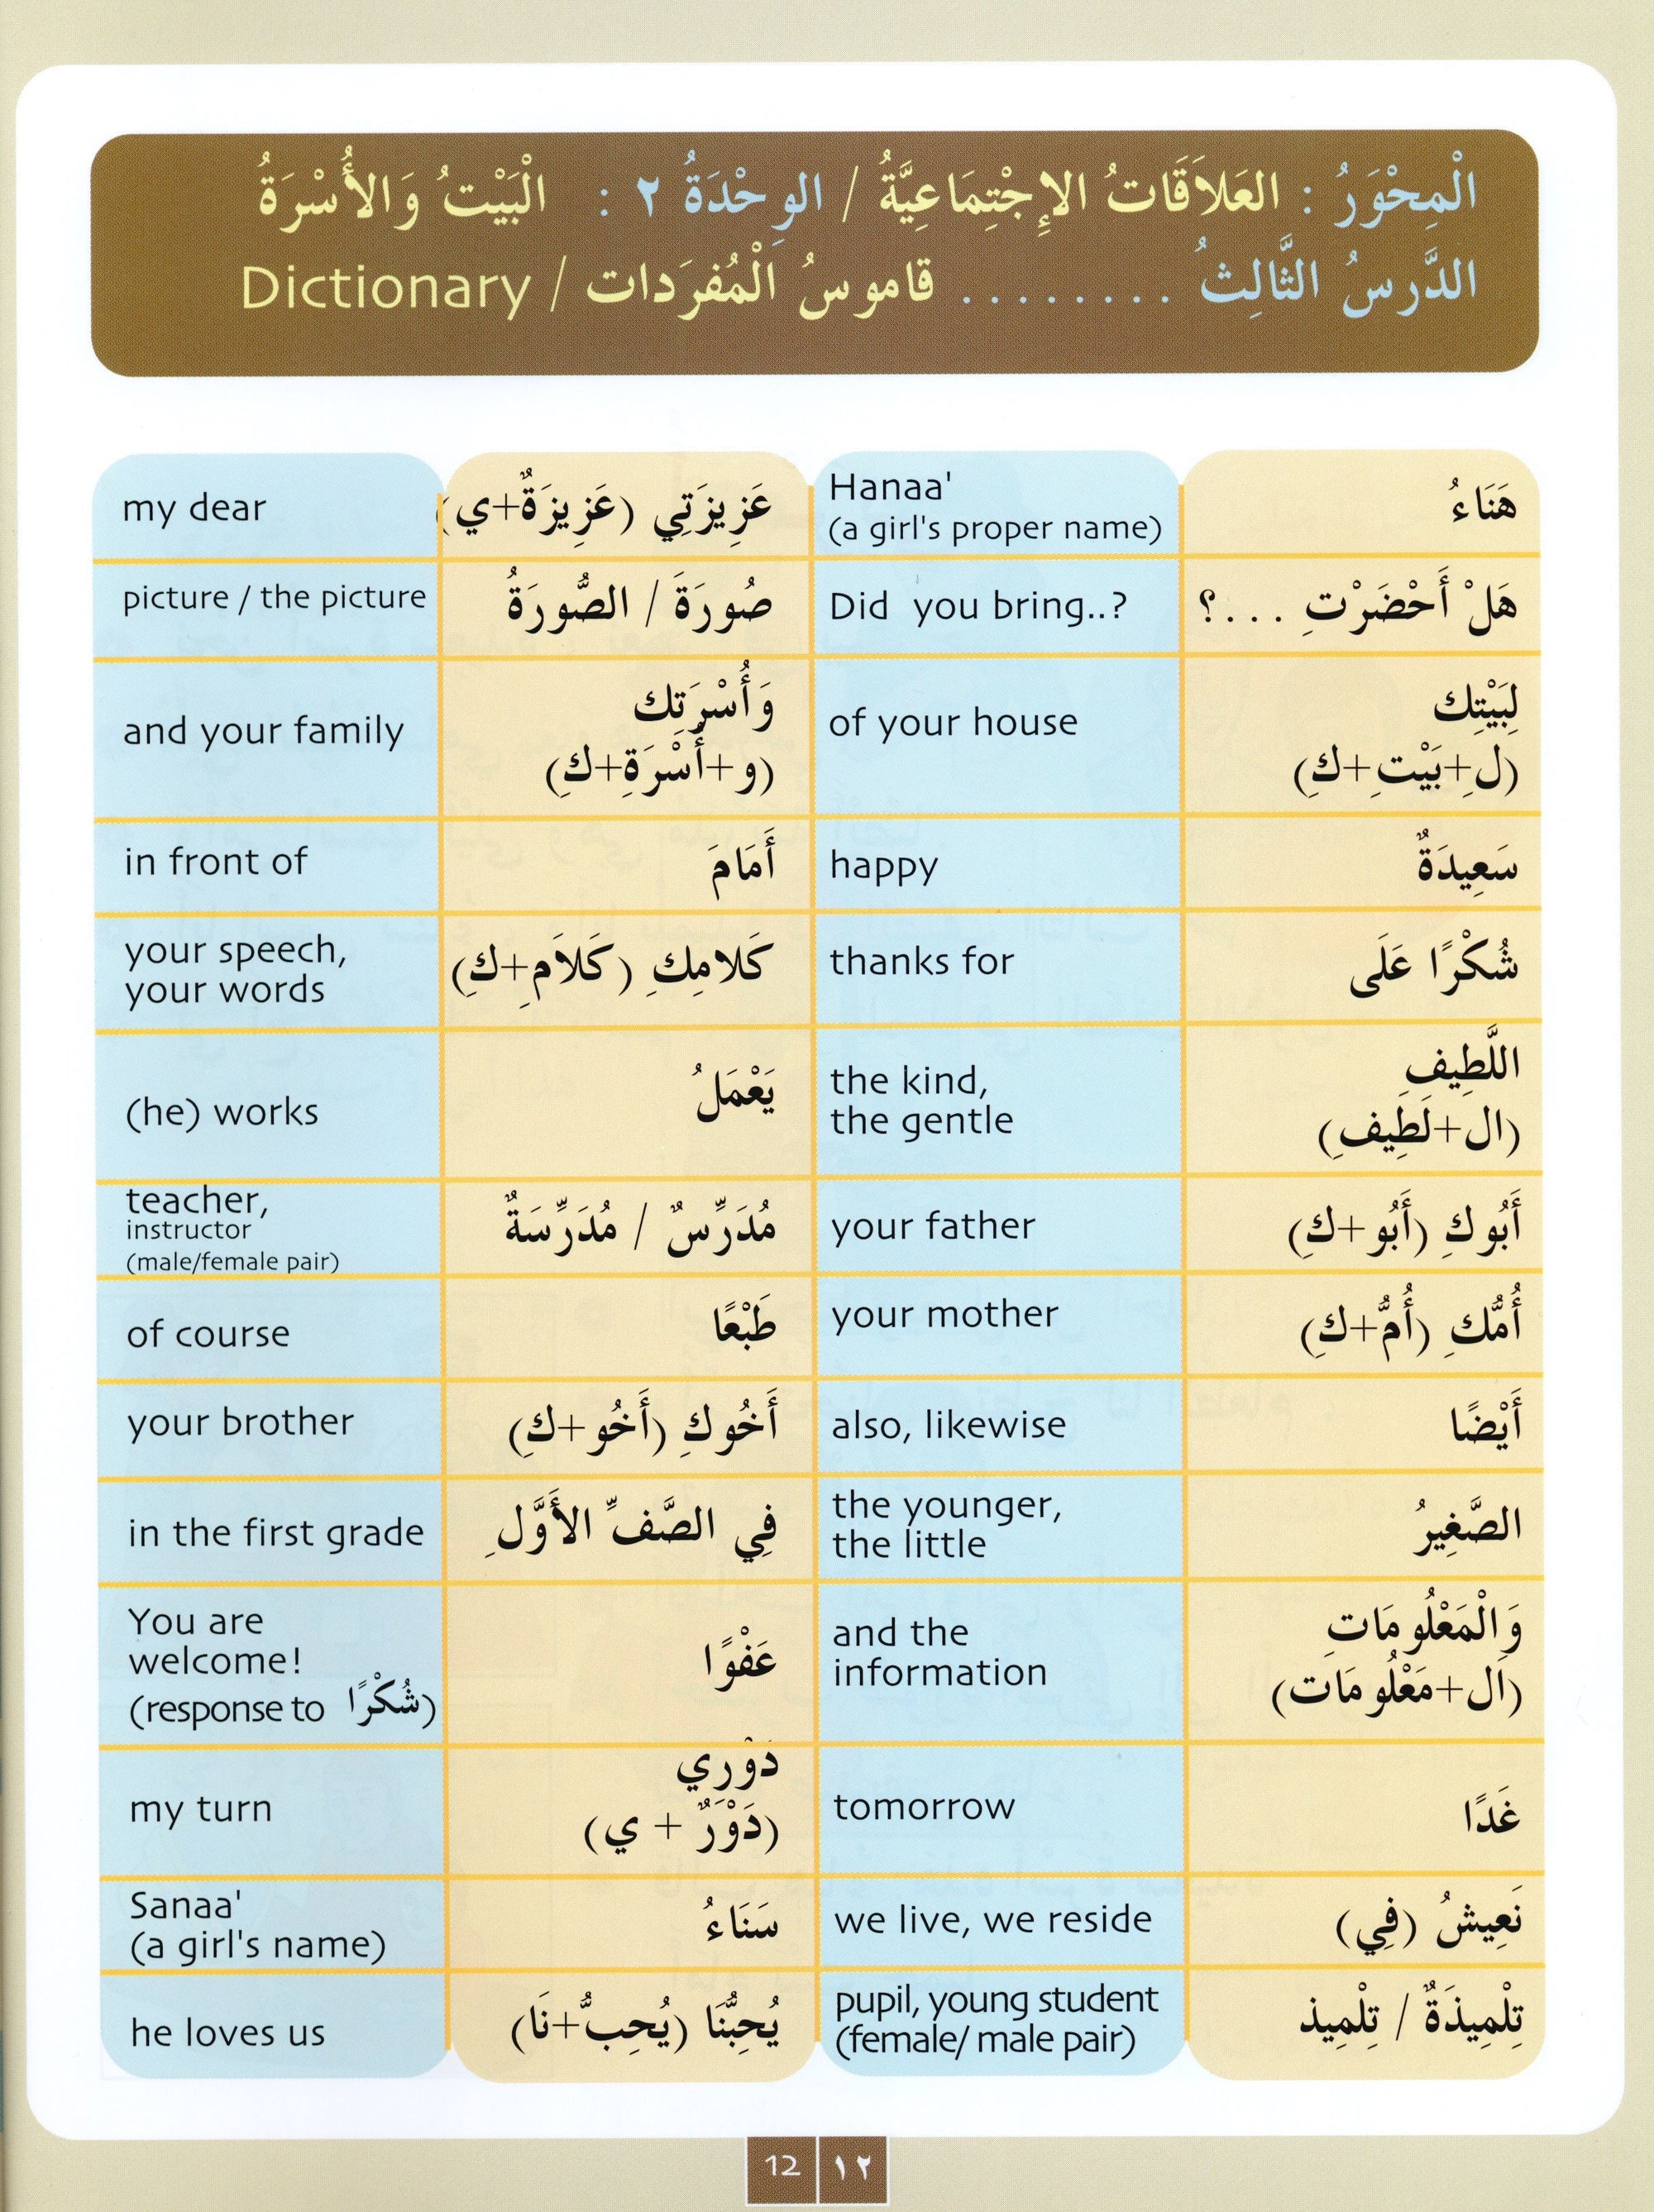 IQRA' Arabic Reader Textbook Level 3